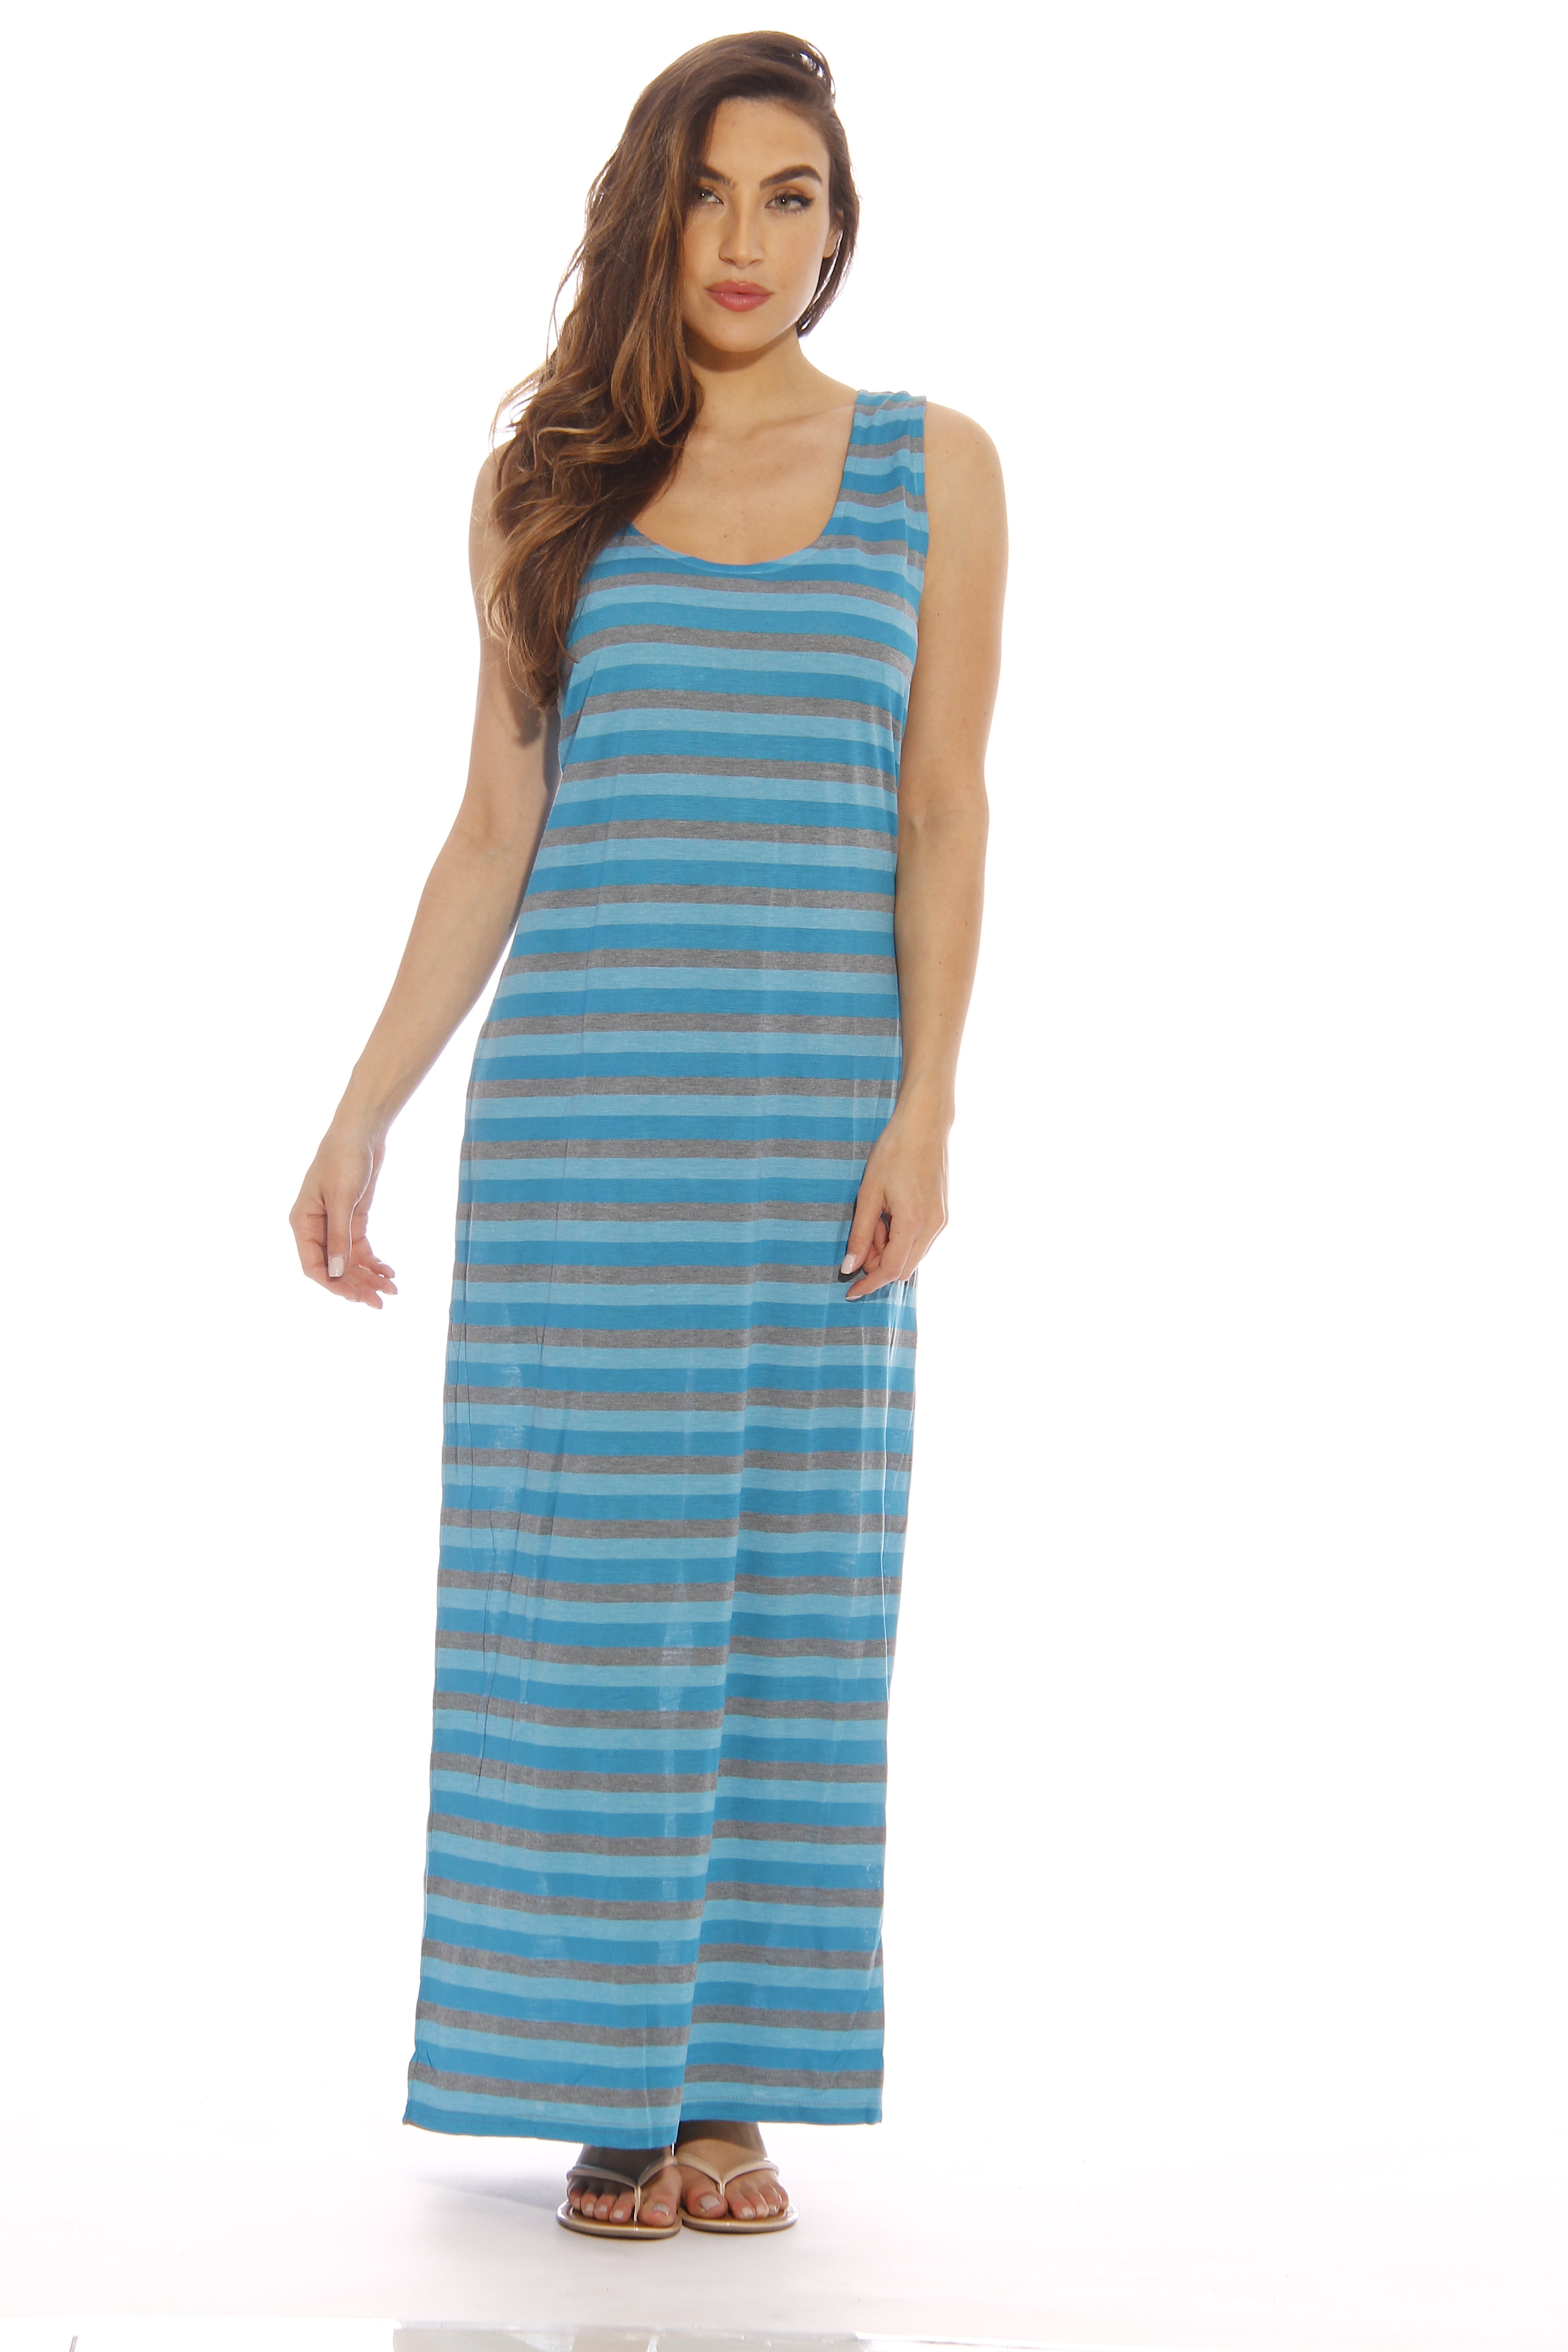 Just Love - Plus Size Summer Dresses / Maxi Dress (Turquoise, 1X ...